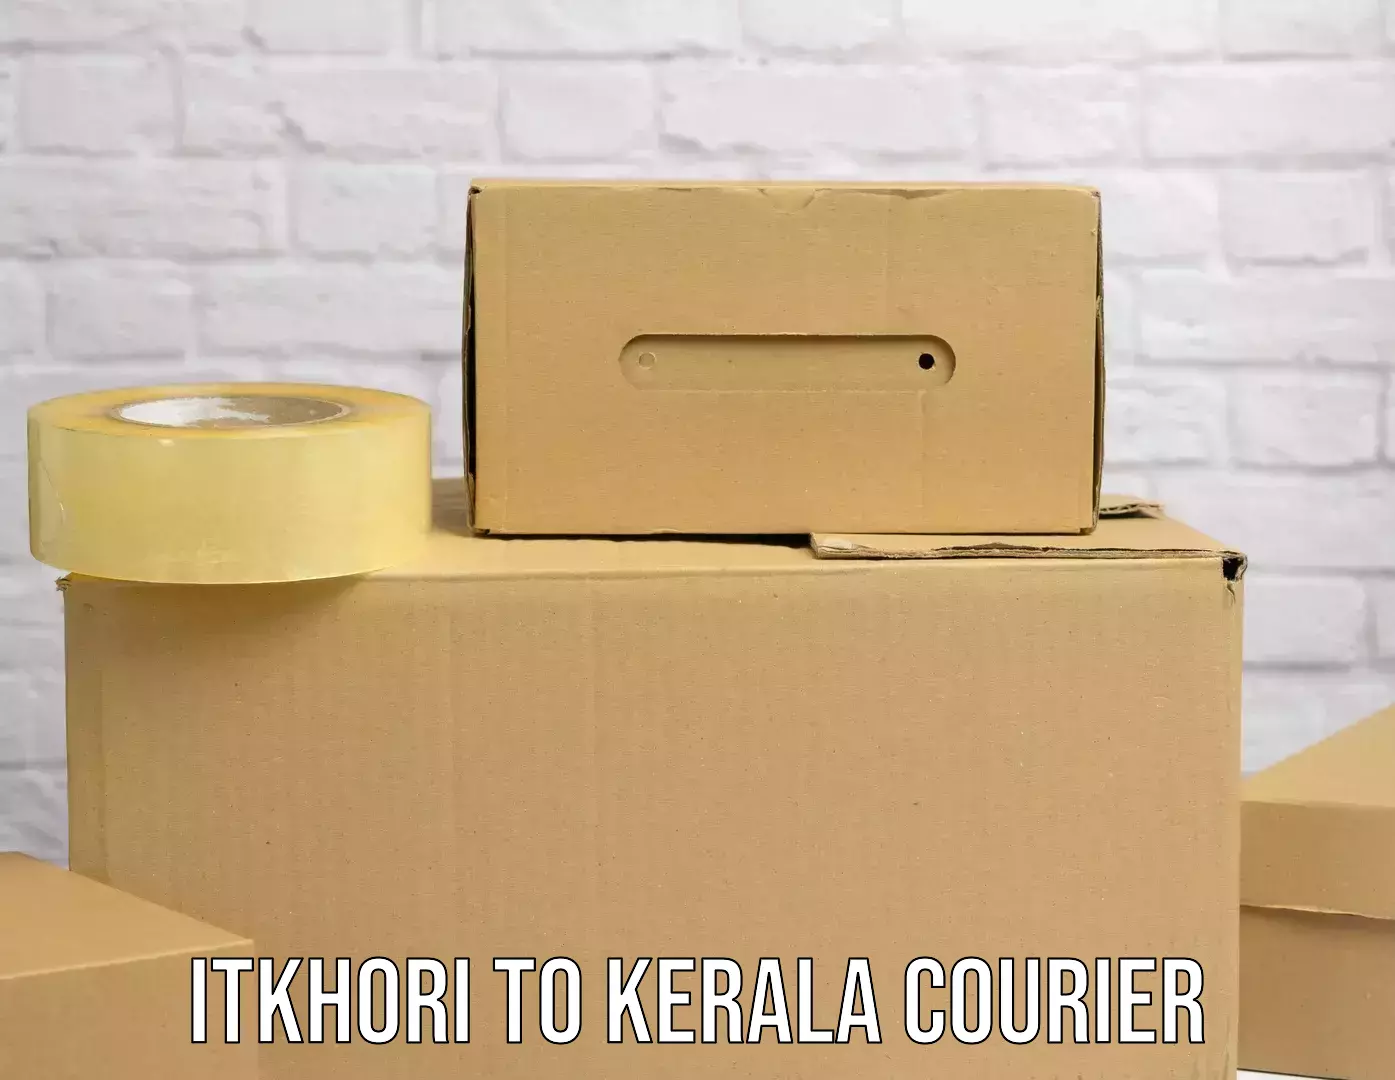 Efficient order fulfillment Itkhori to Kerala